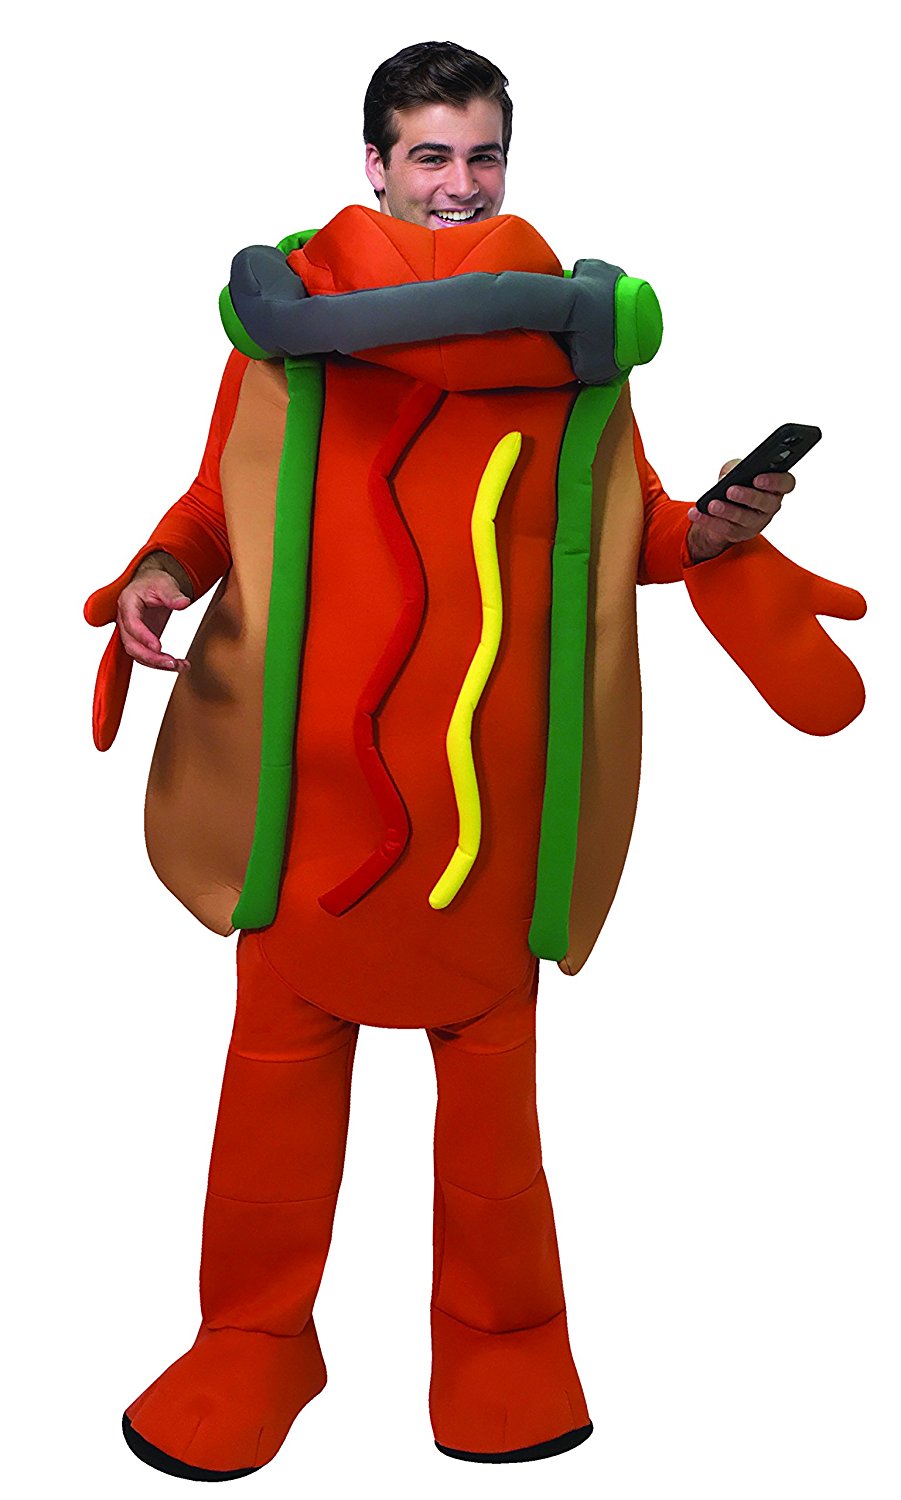 snapchat-dancing-hot-dog-costume-3